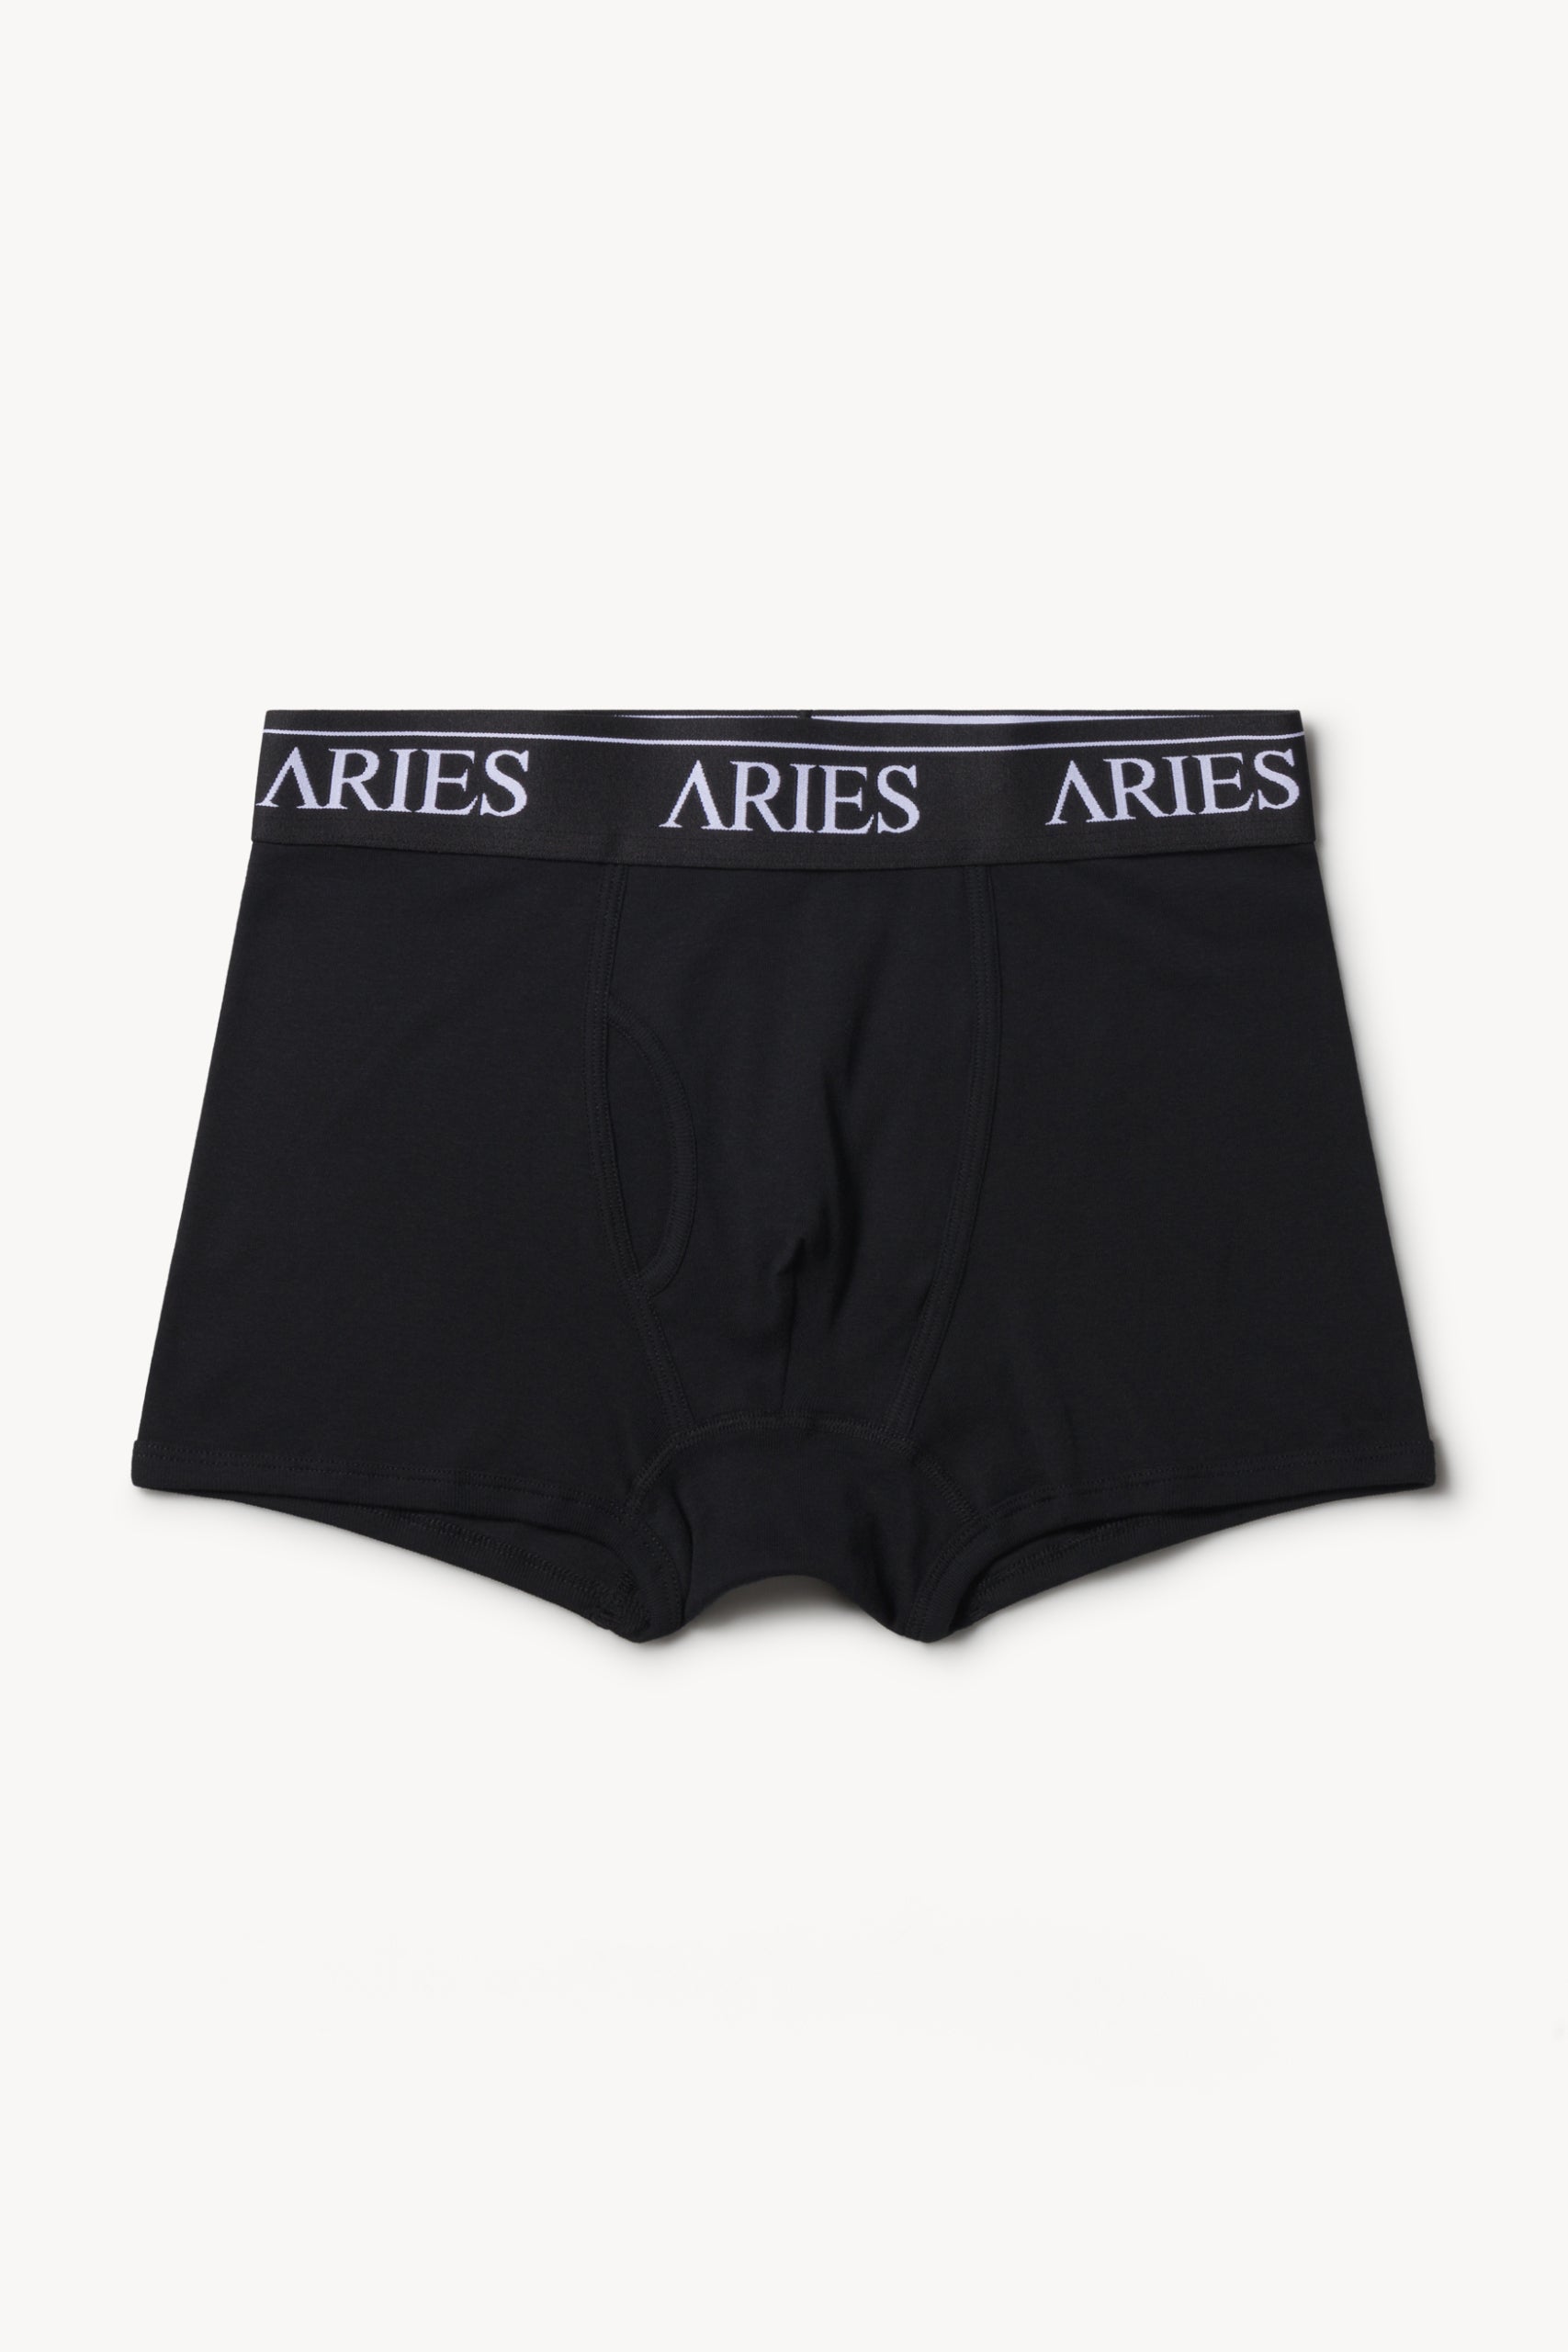 Aries Symbol Boxer Briefs - Davson Sales